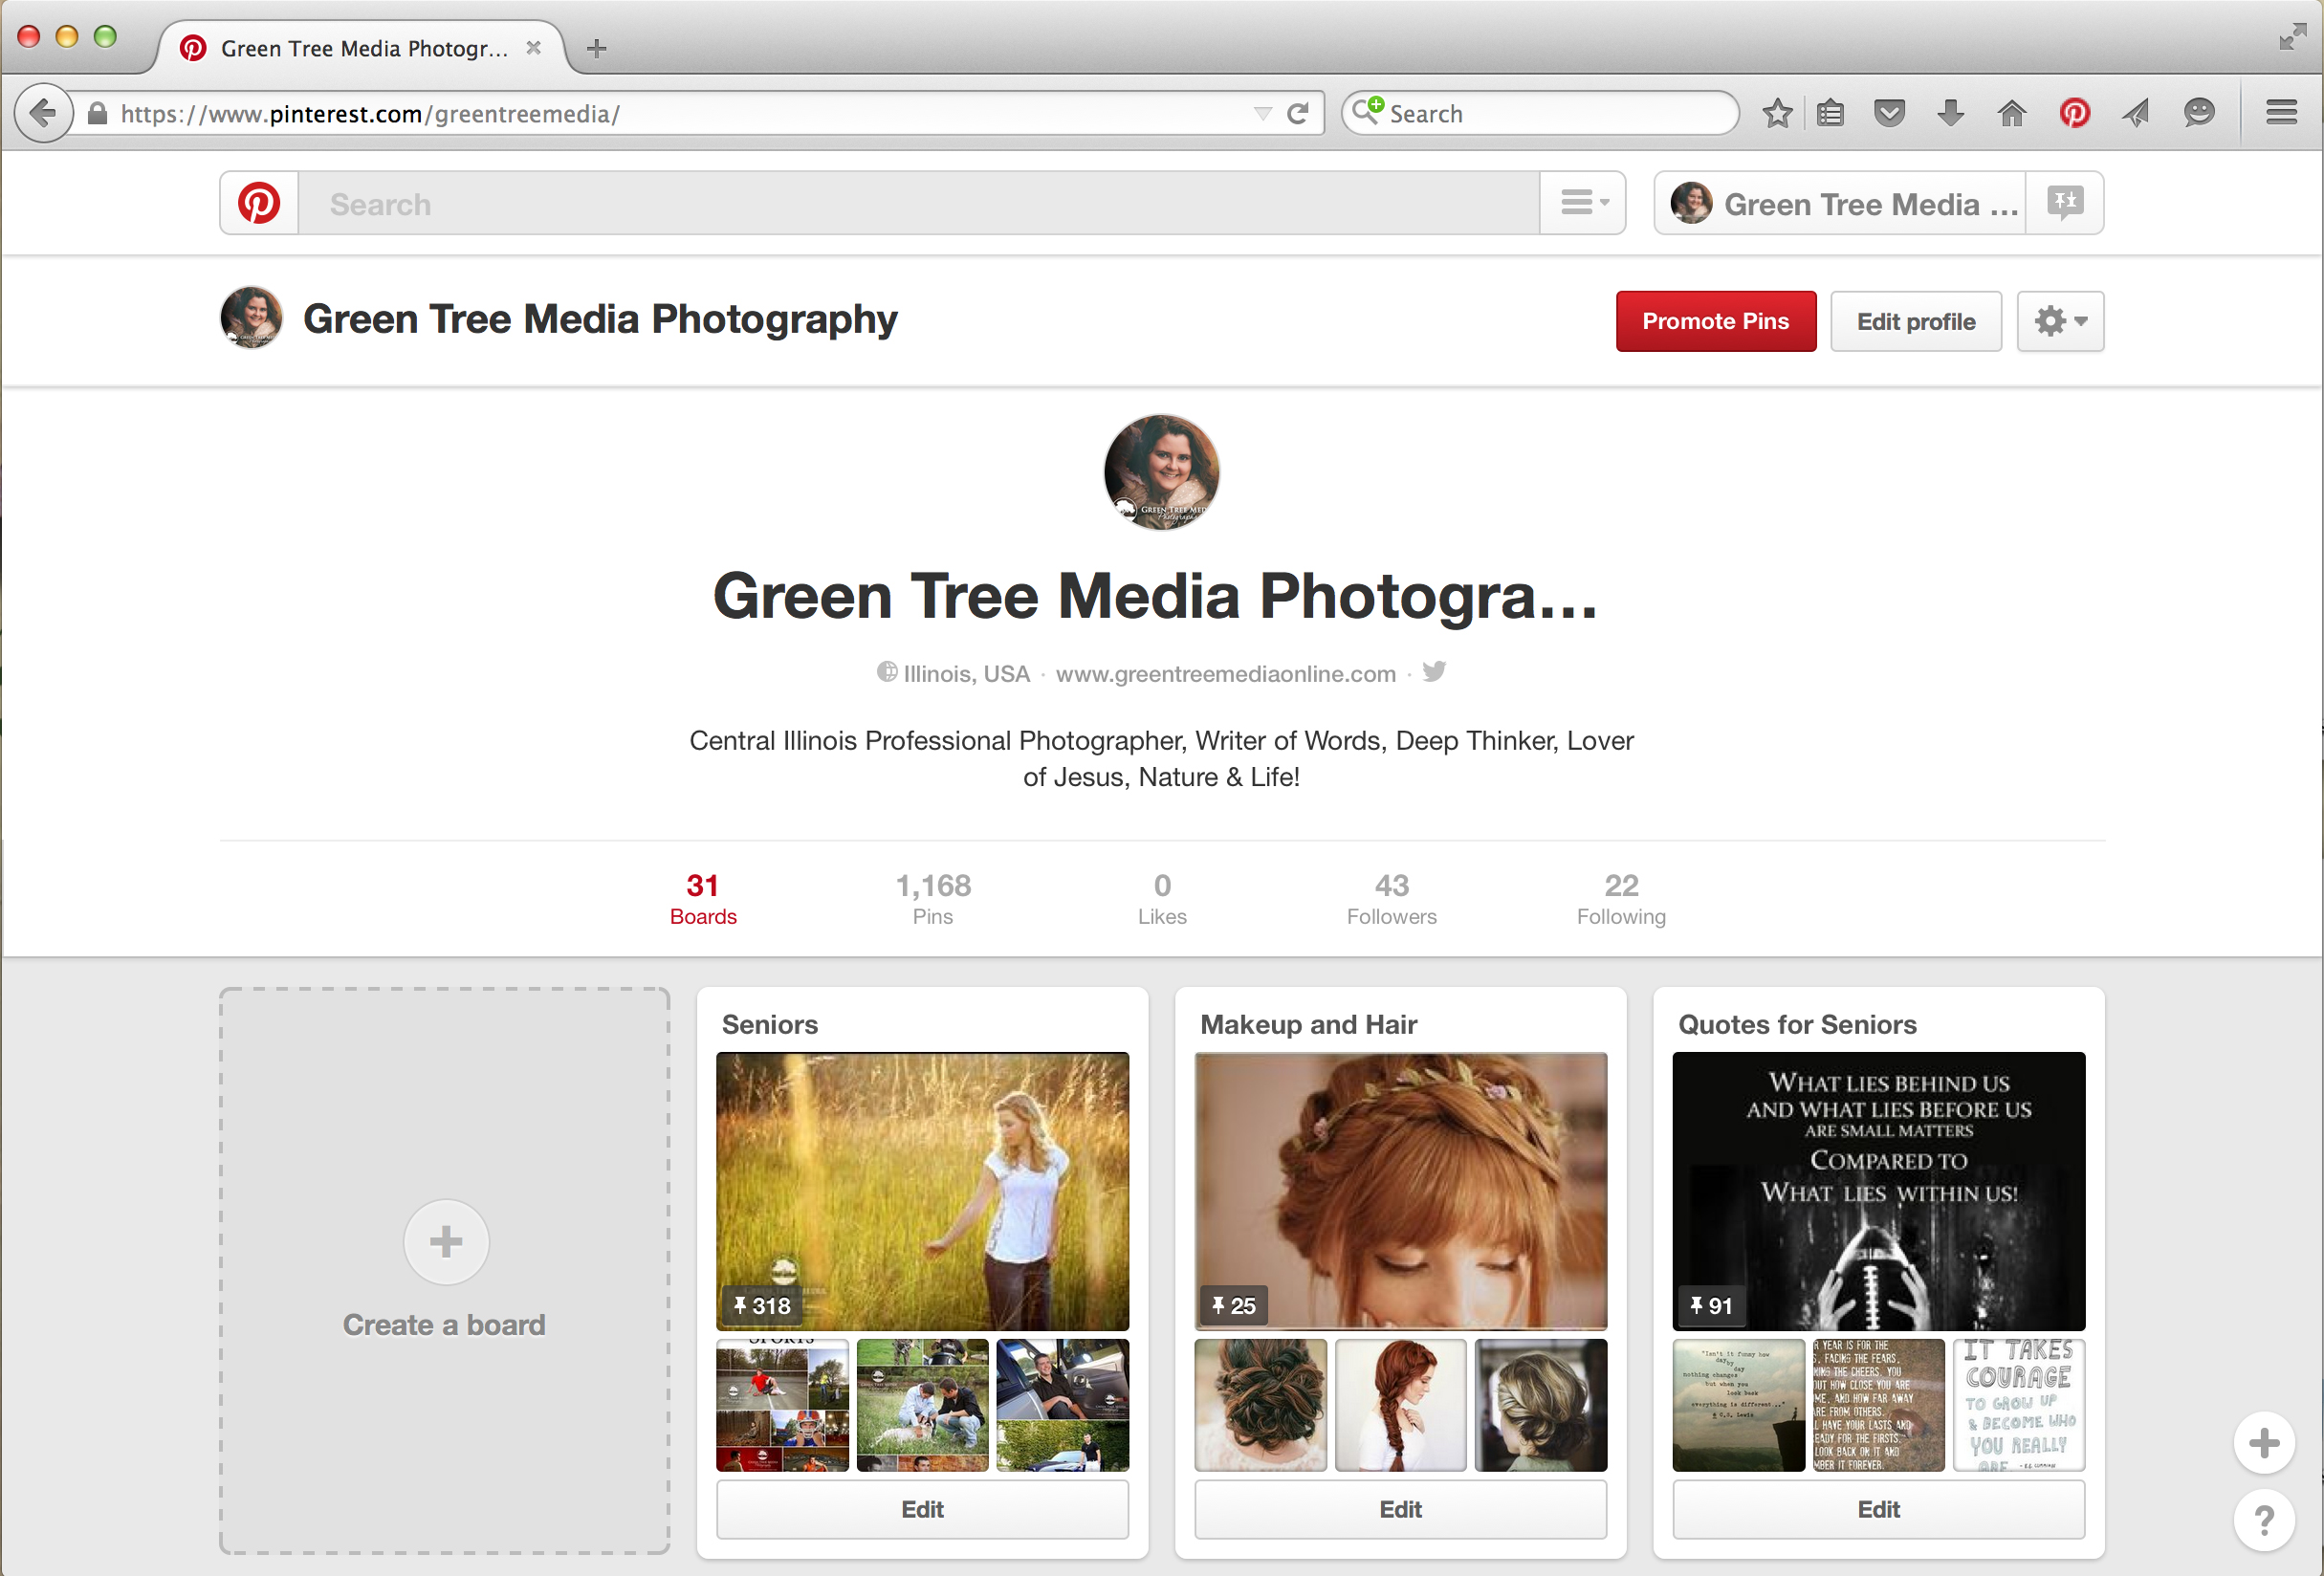 Green Tree Media Photography on Pinterest